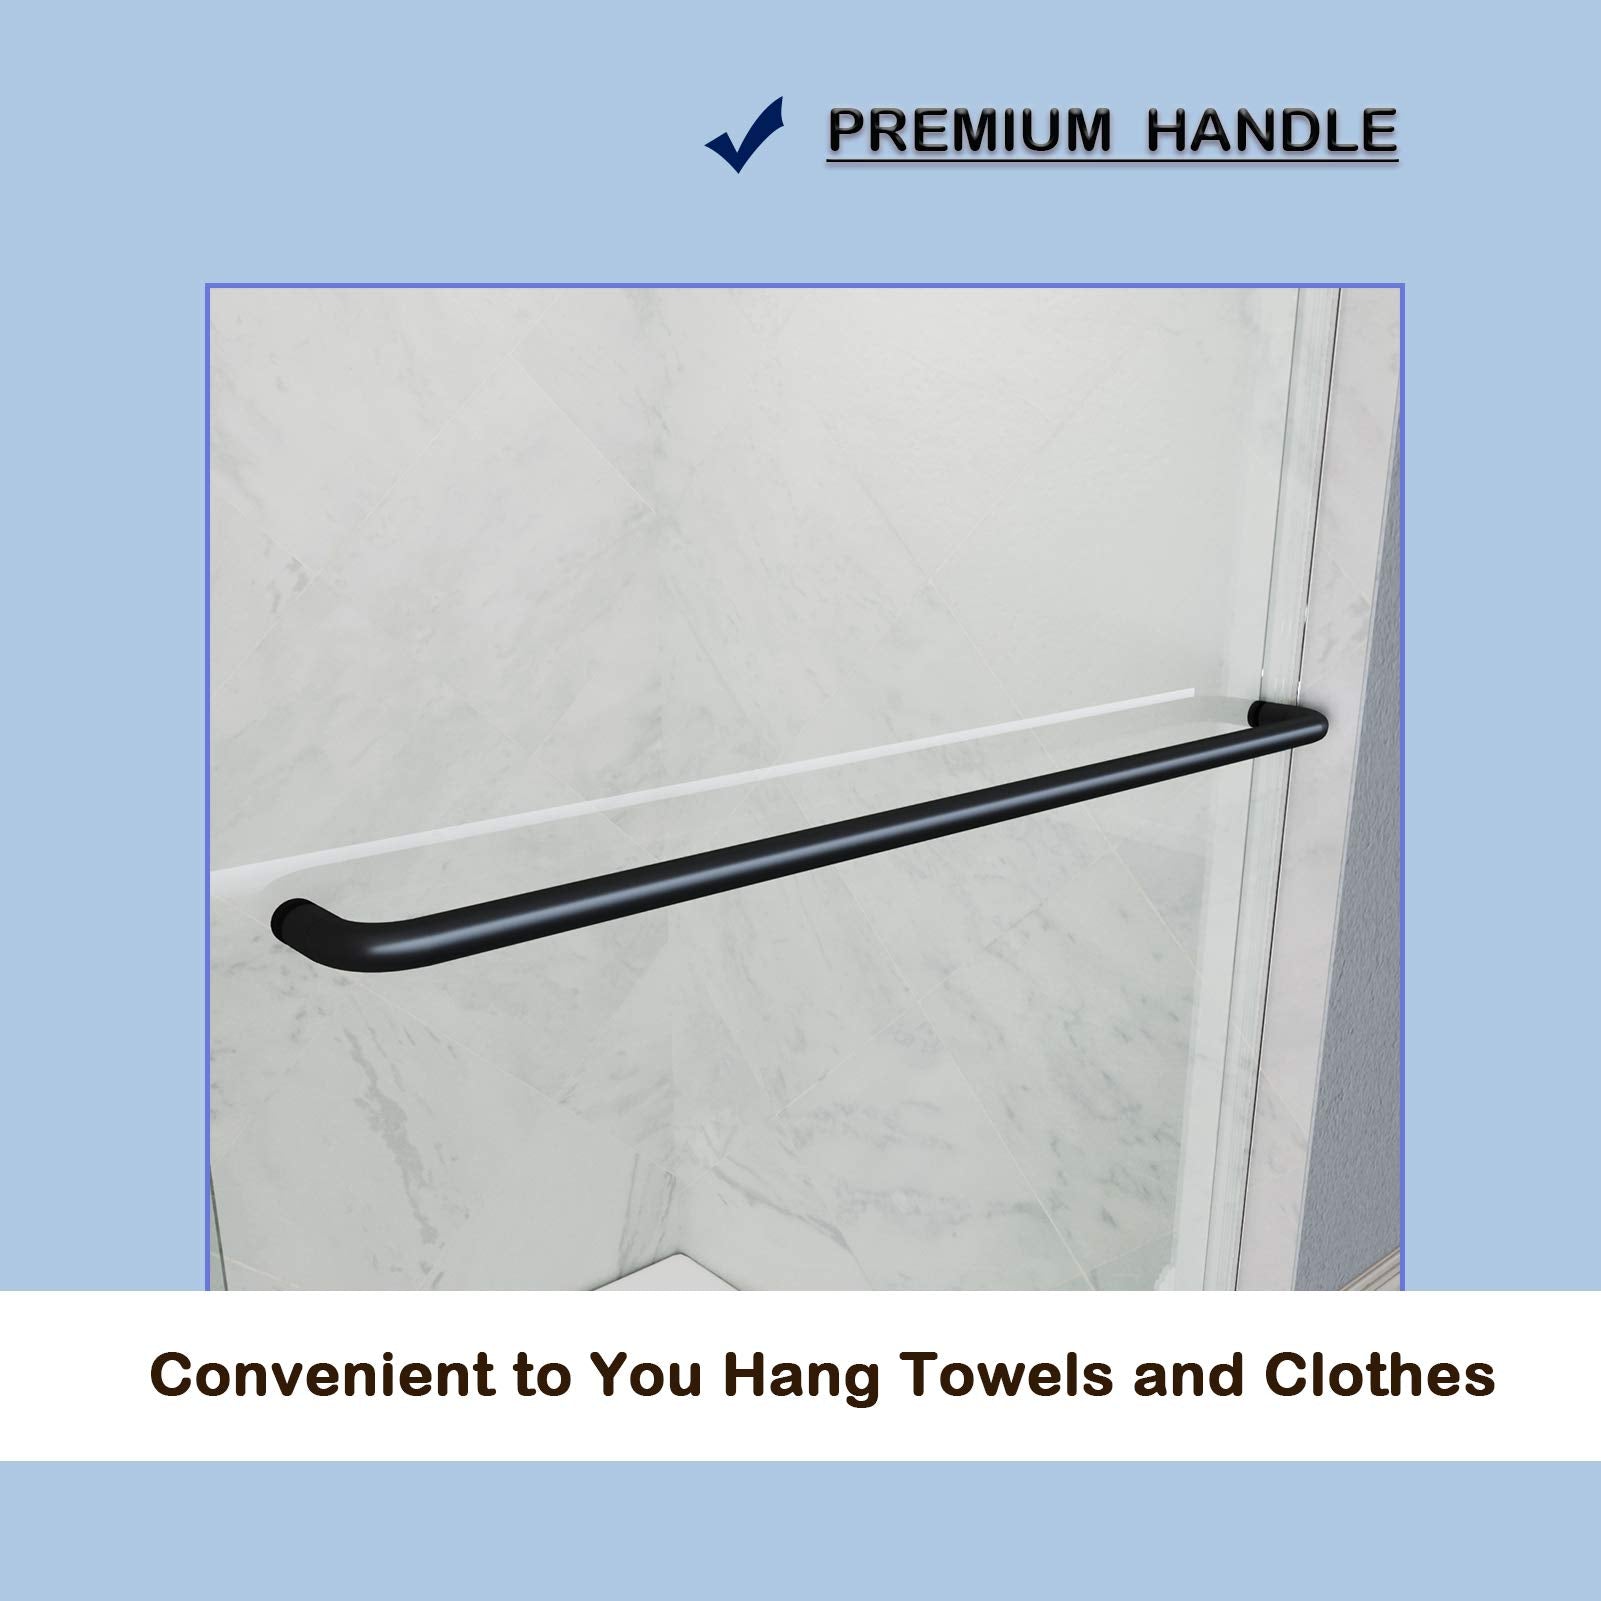 Premium handle, convenient to you hang towels and clothes